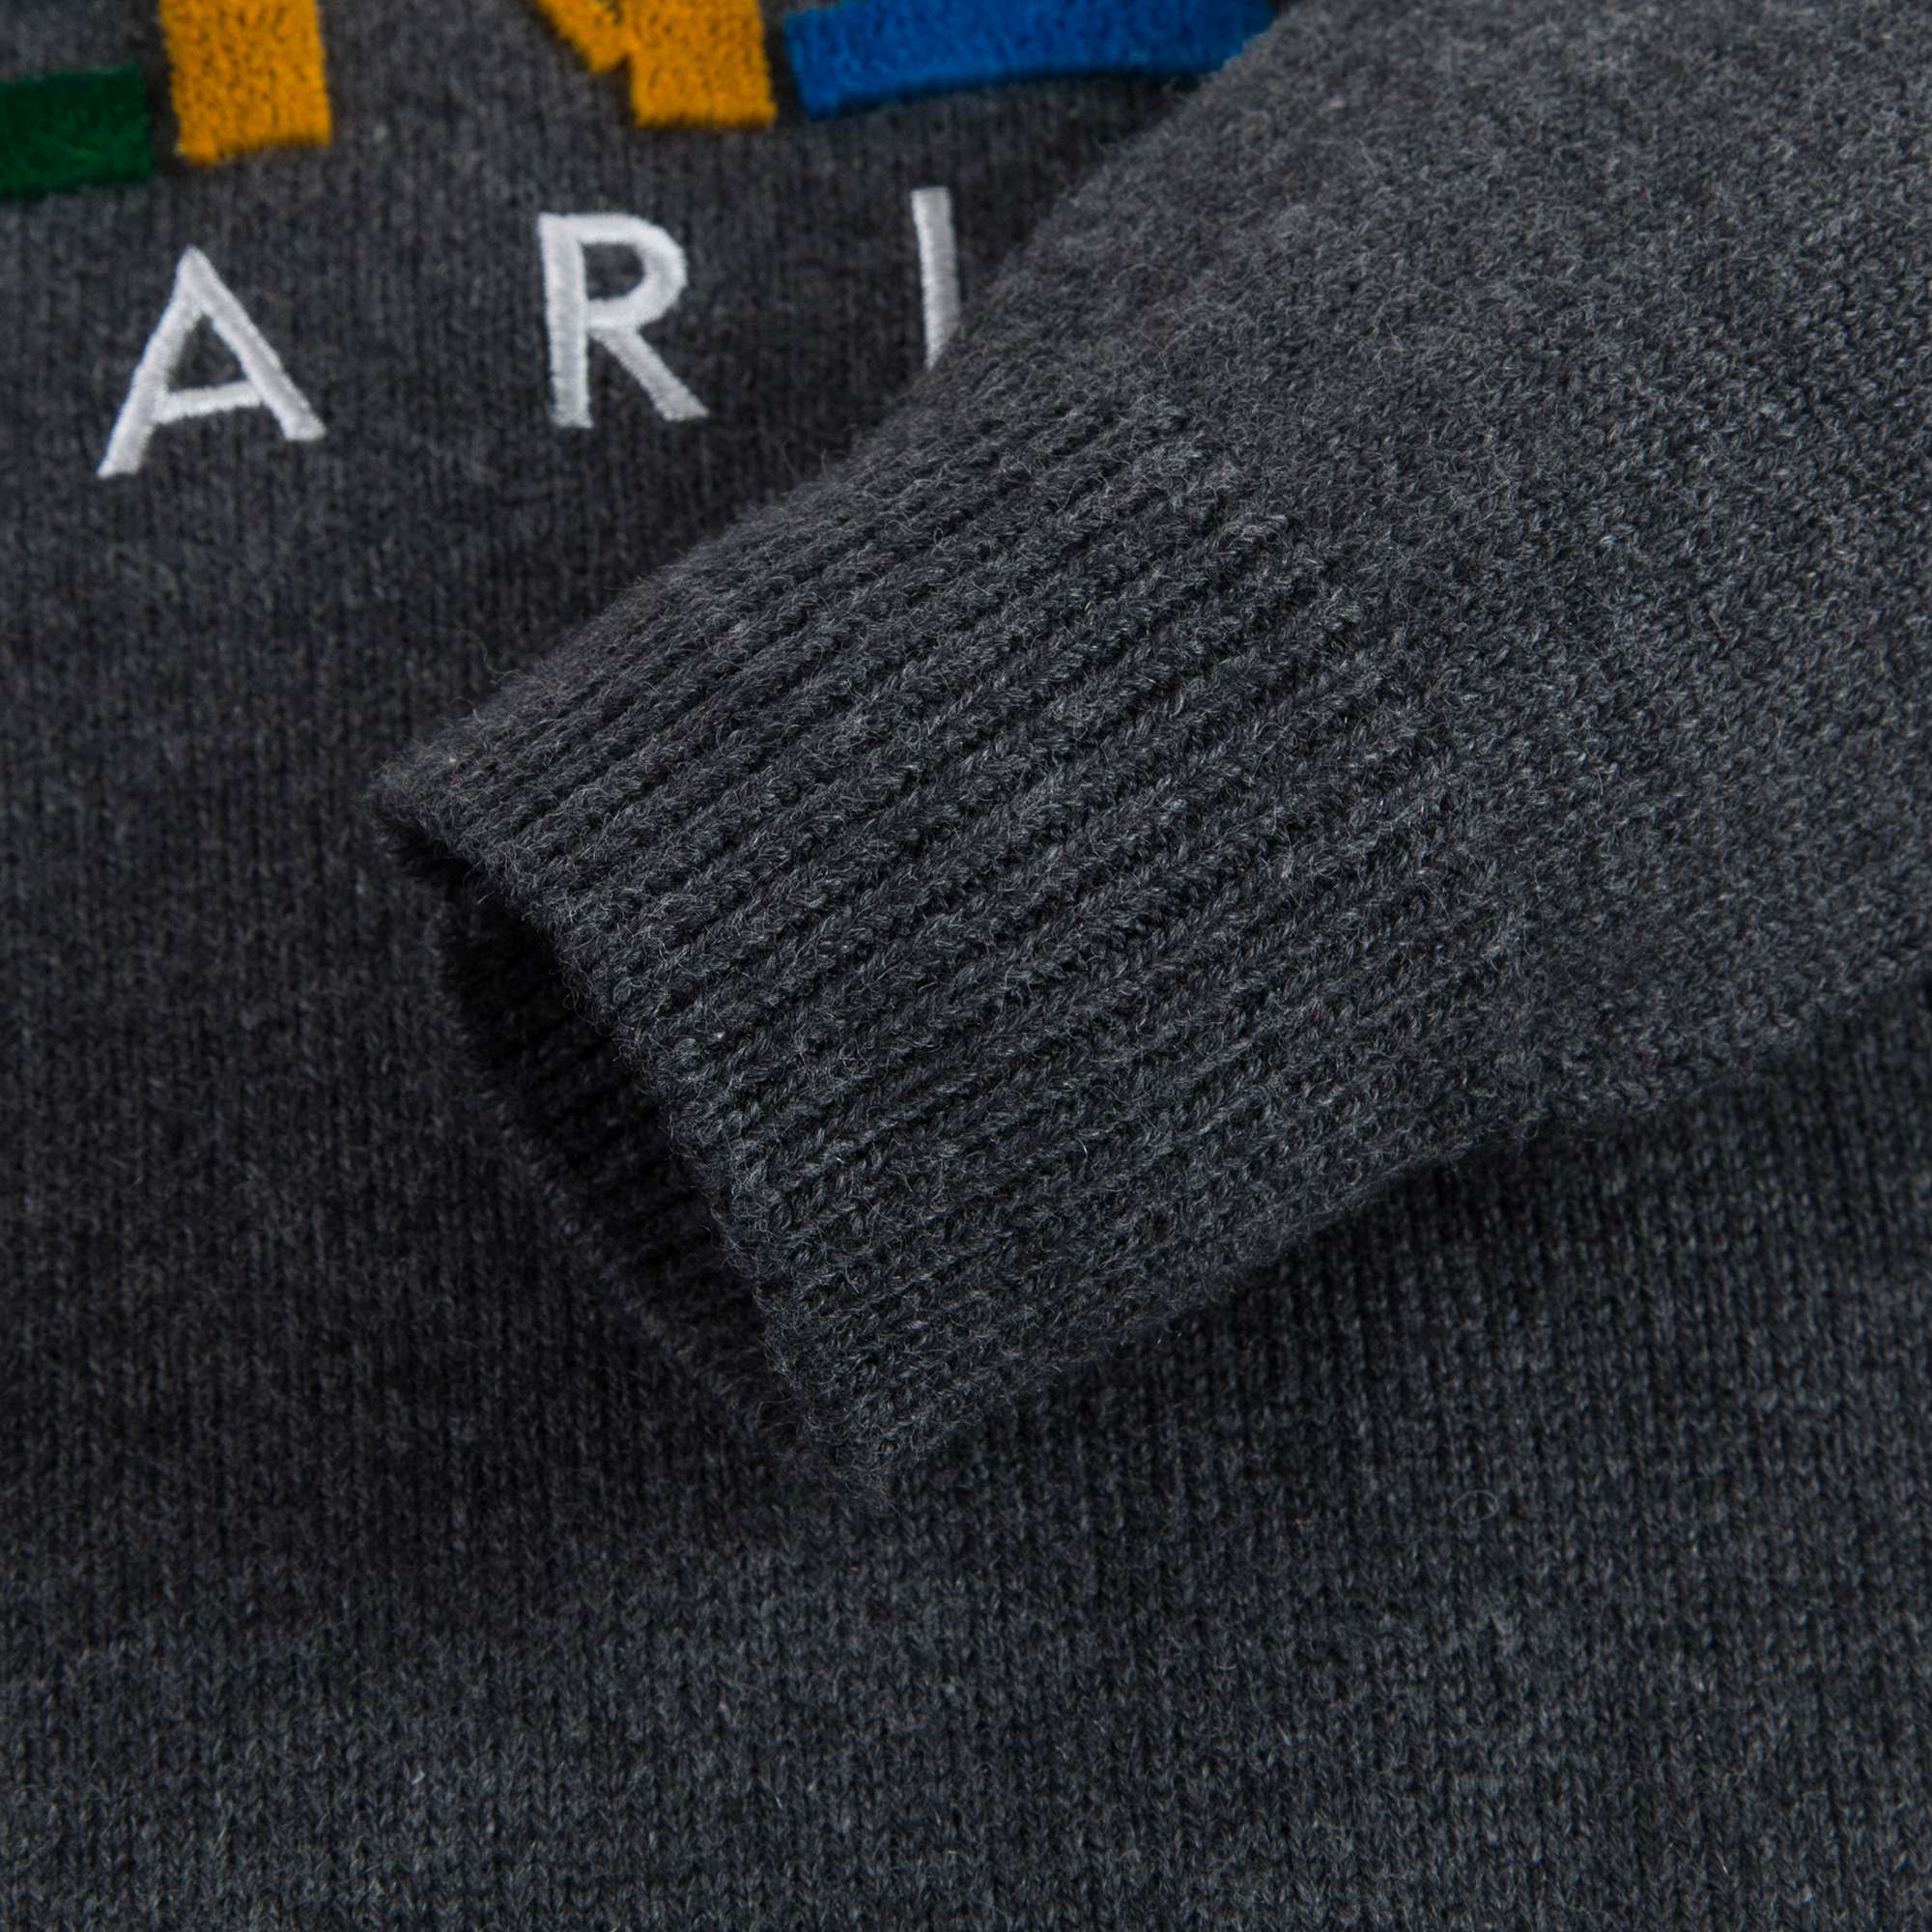 Boys Dark Marl Grey Logo Cotton Sweater